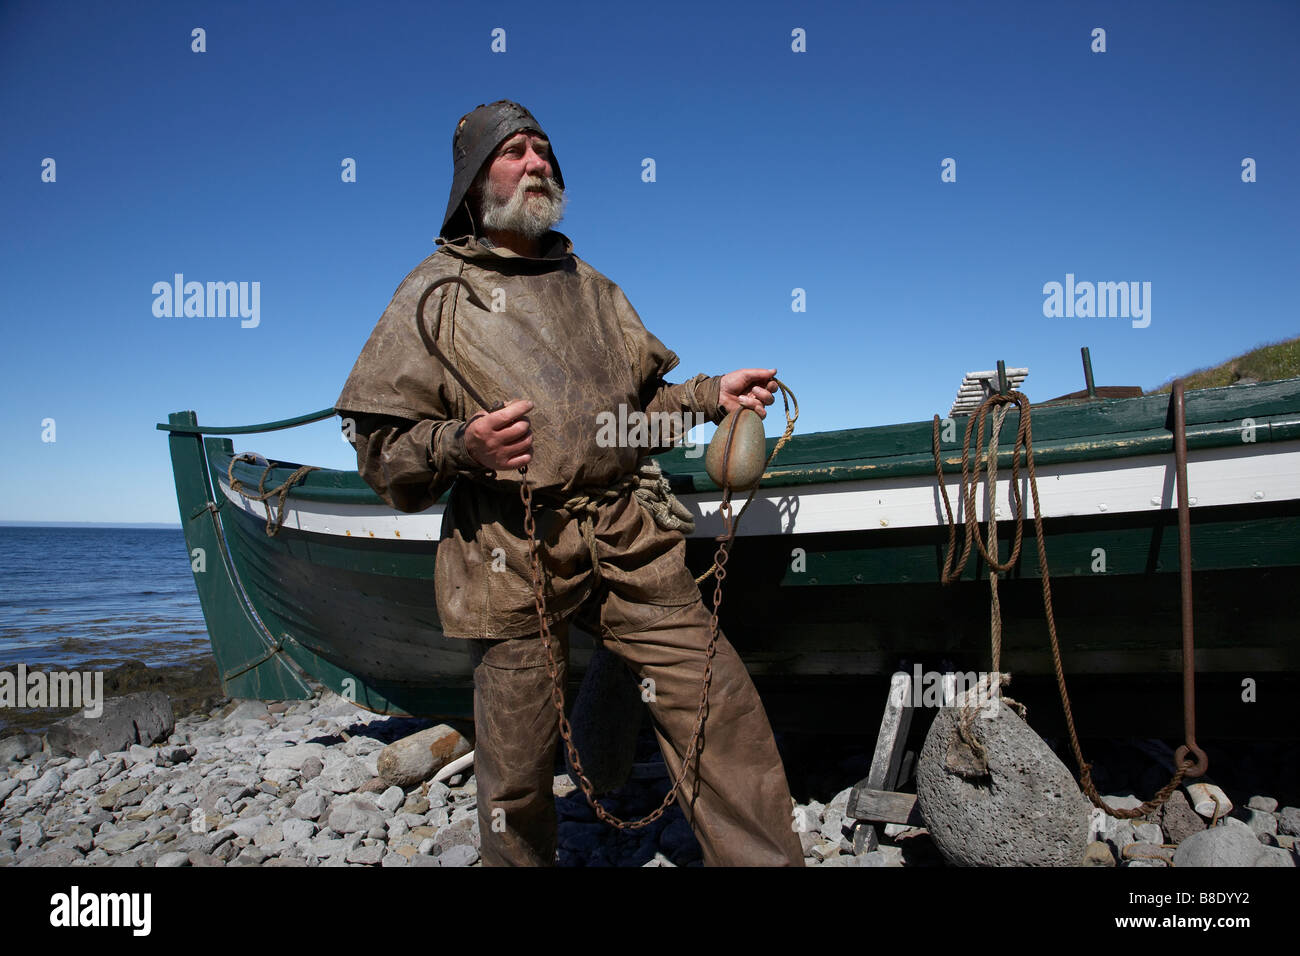 https://c8.alamy.com/comp/B8DYY2/fisherman-in-old-gear-bolungarvik-town-west-fjords-iceland-B8DYY2.jpg